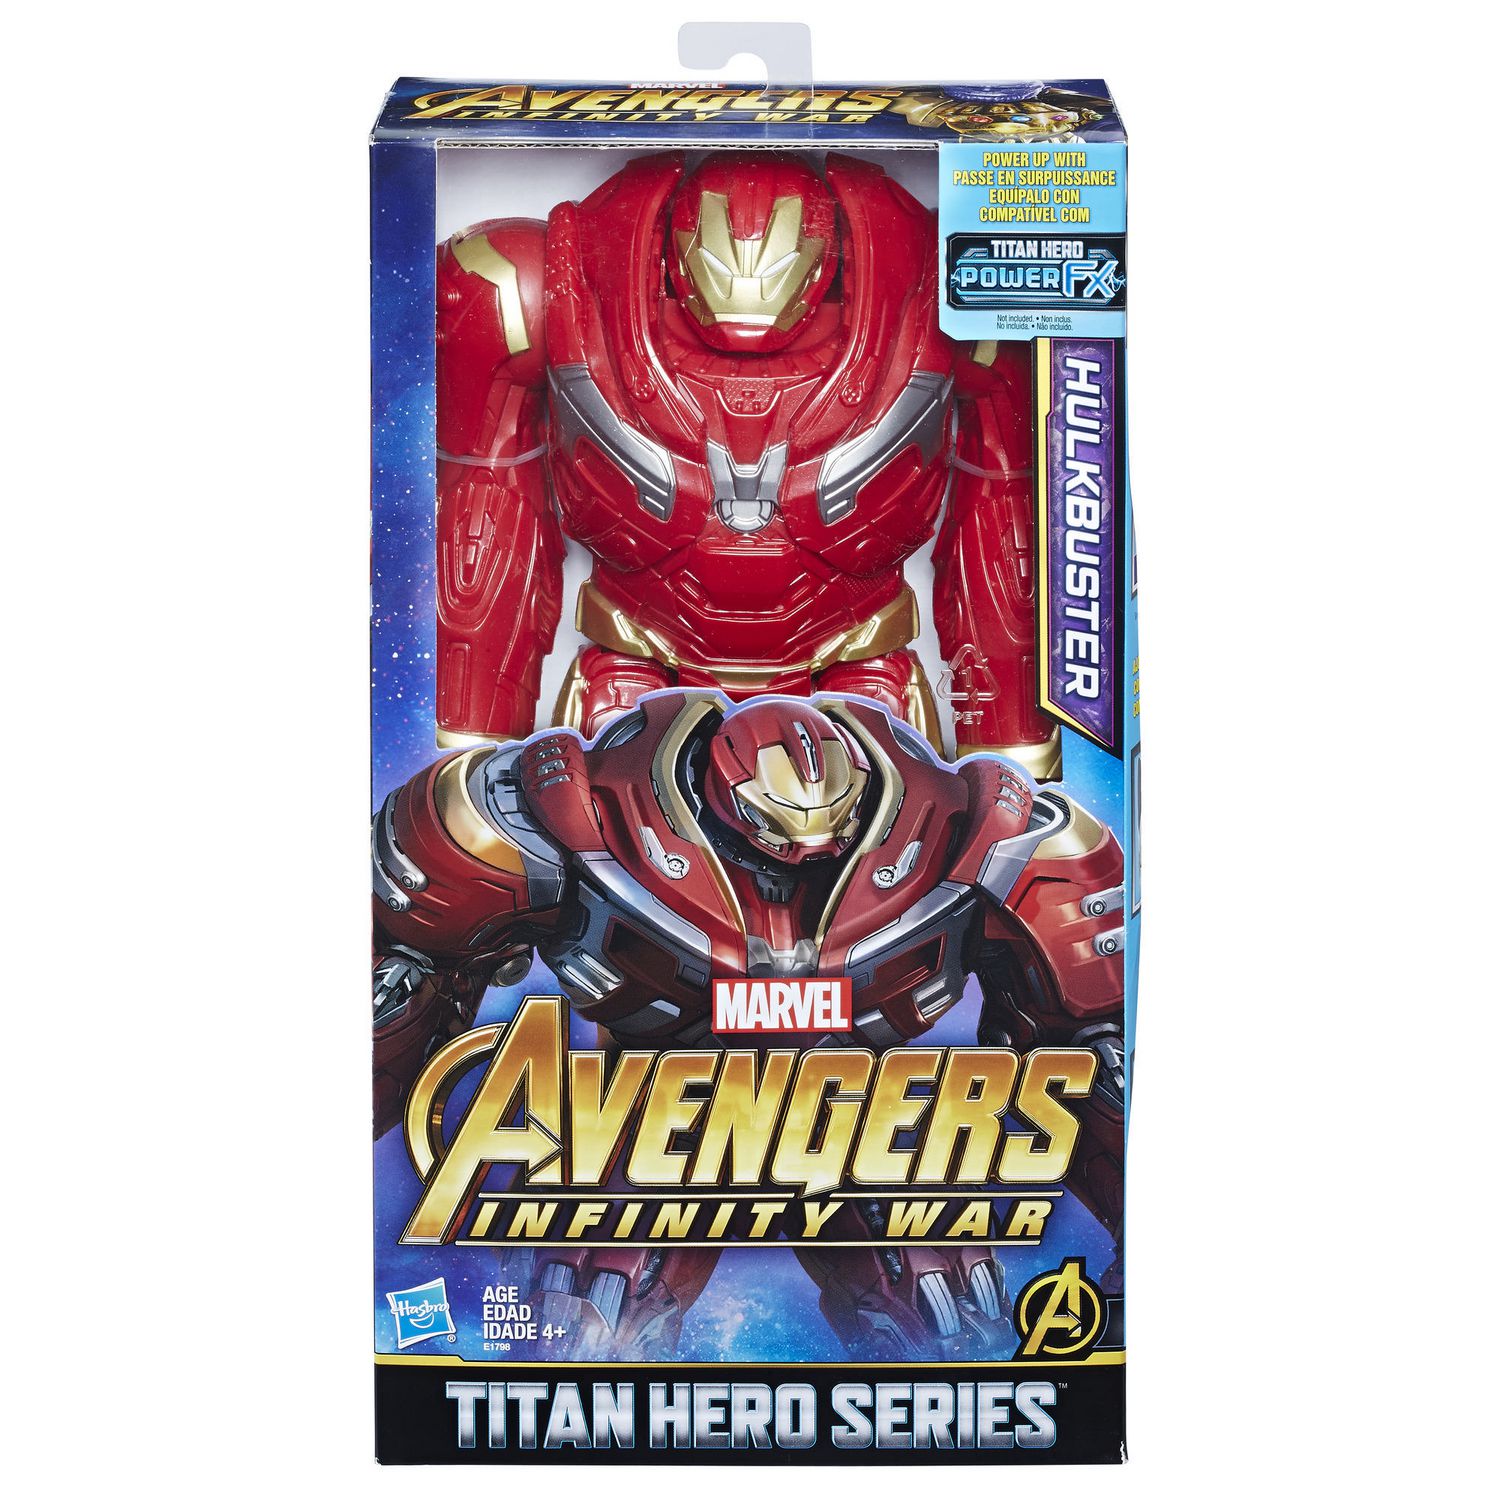 Marvel Avengers Titan Hero Series Power FX Set of Four Action Figures